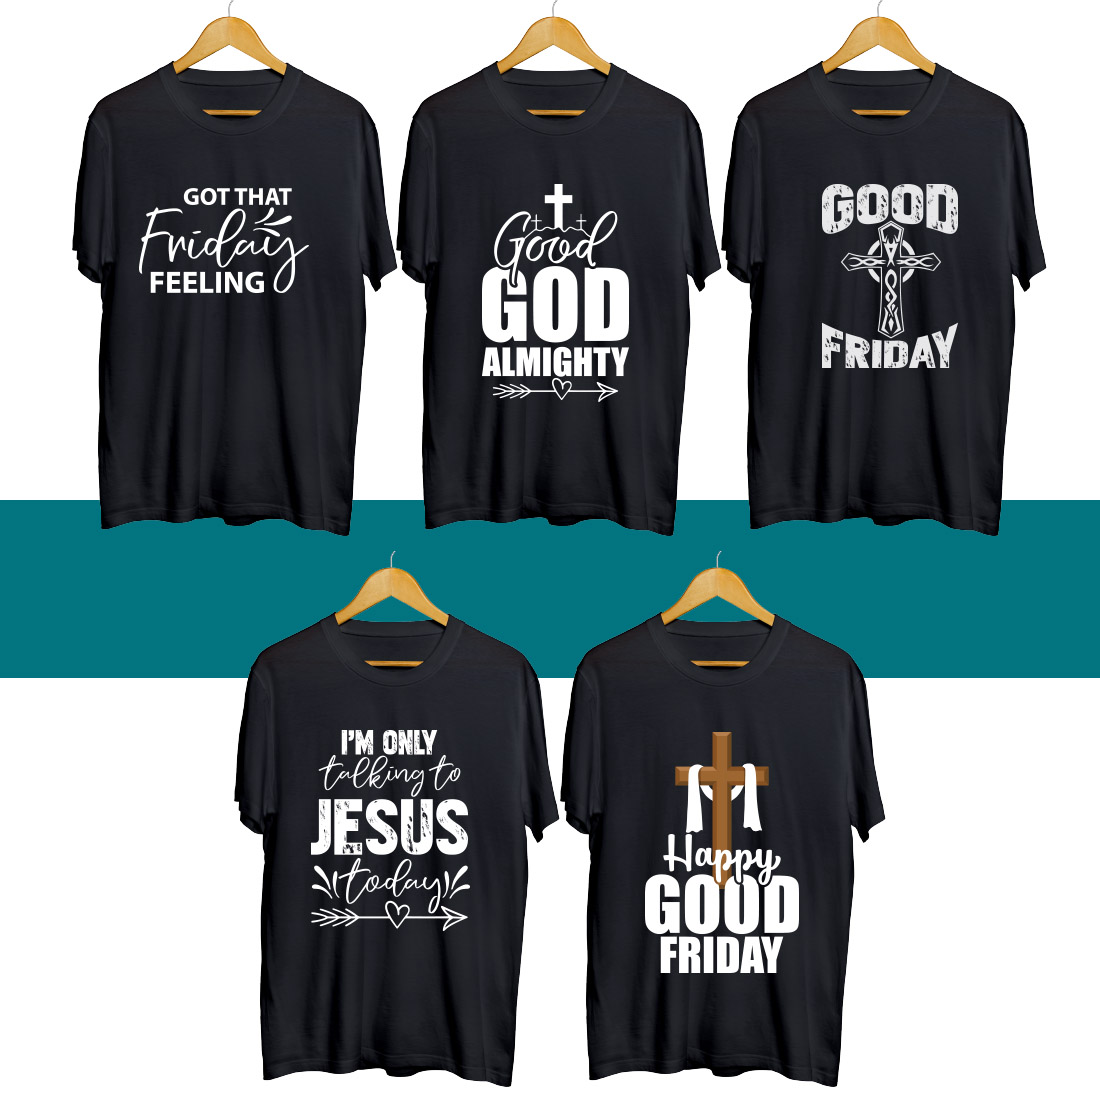 Good Friday SVG T Shirt Designs Bundle cover image.